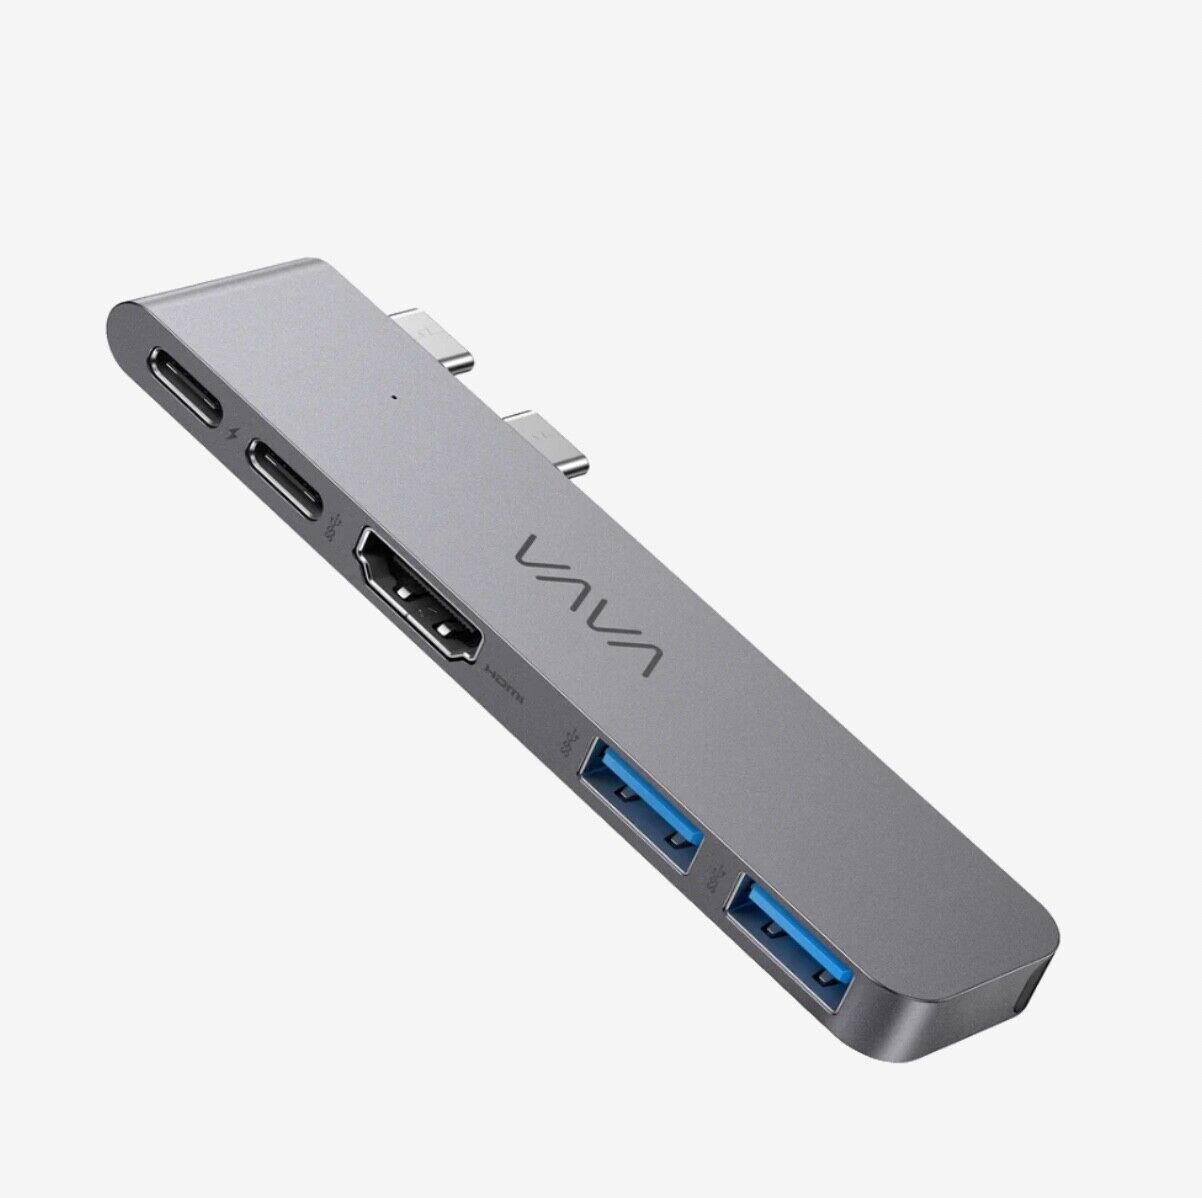 Vava 5 Port USB Hub type C for MacBook Pro Air multiple device HDMI USB C USB A